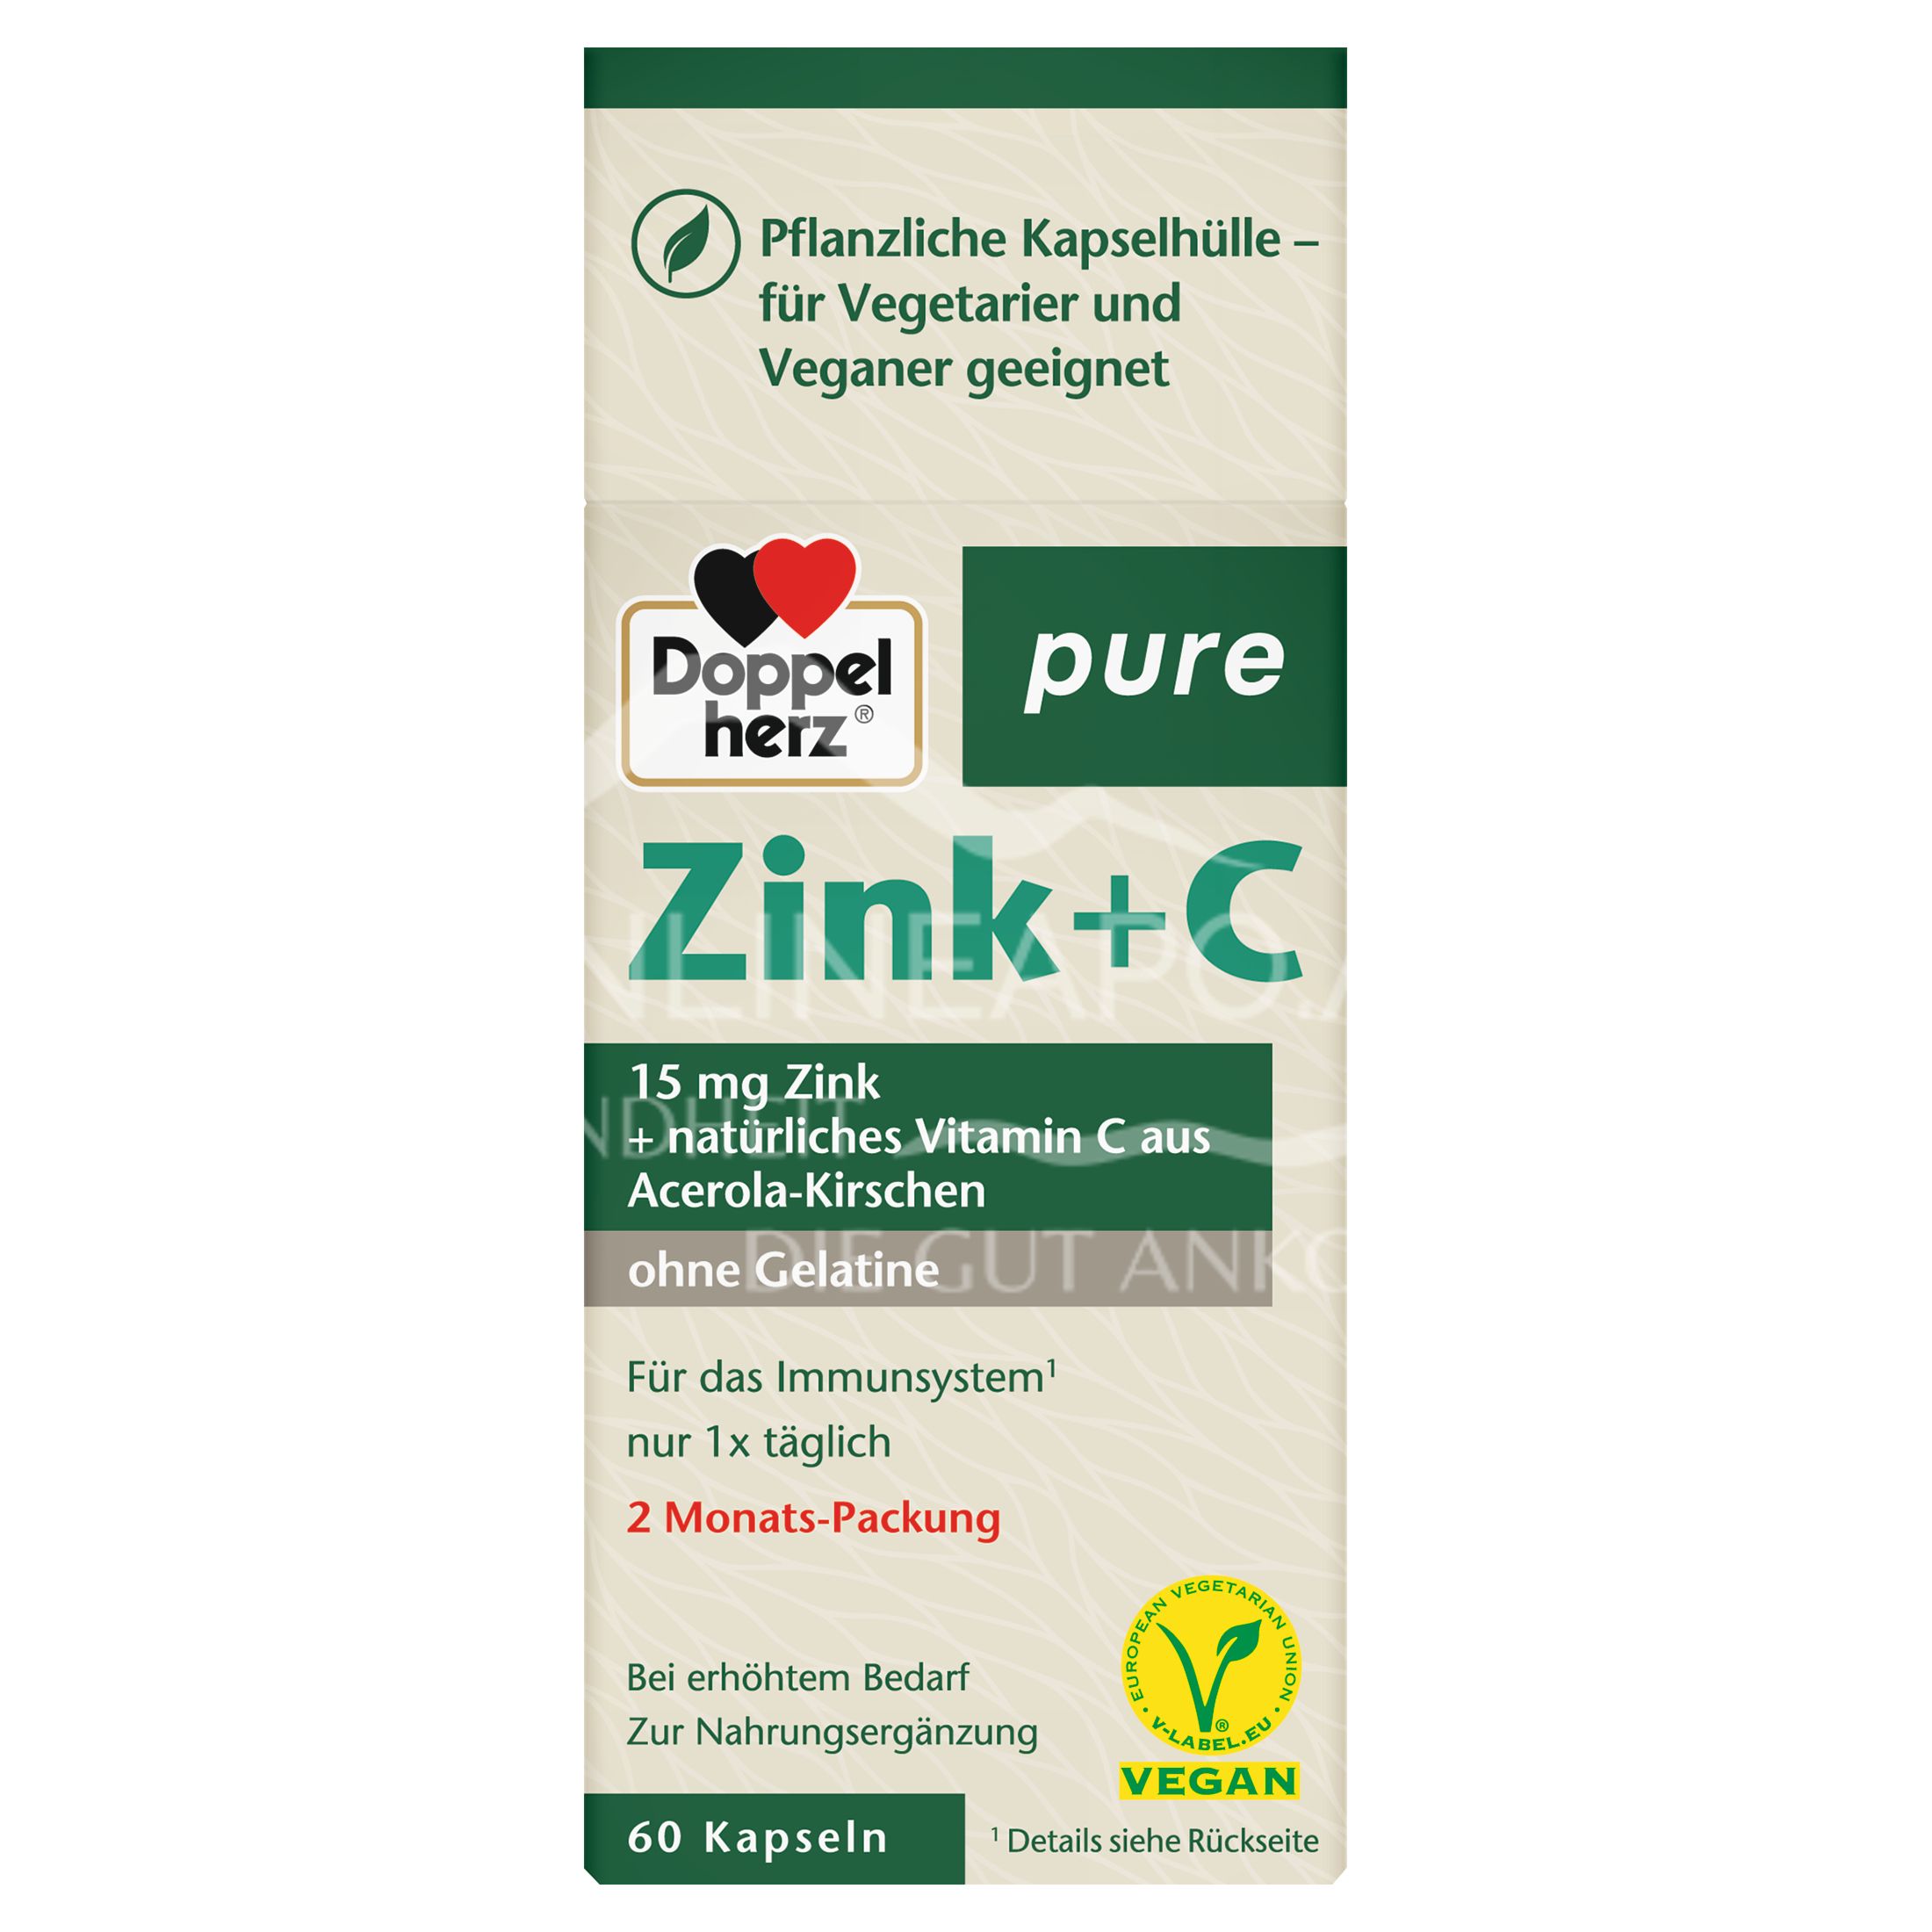 Doppelherz pure Zink + C Kapseln